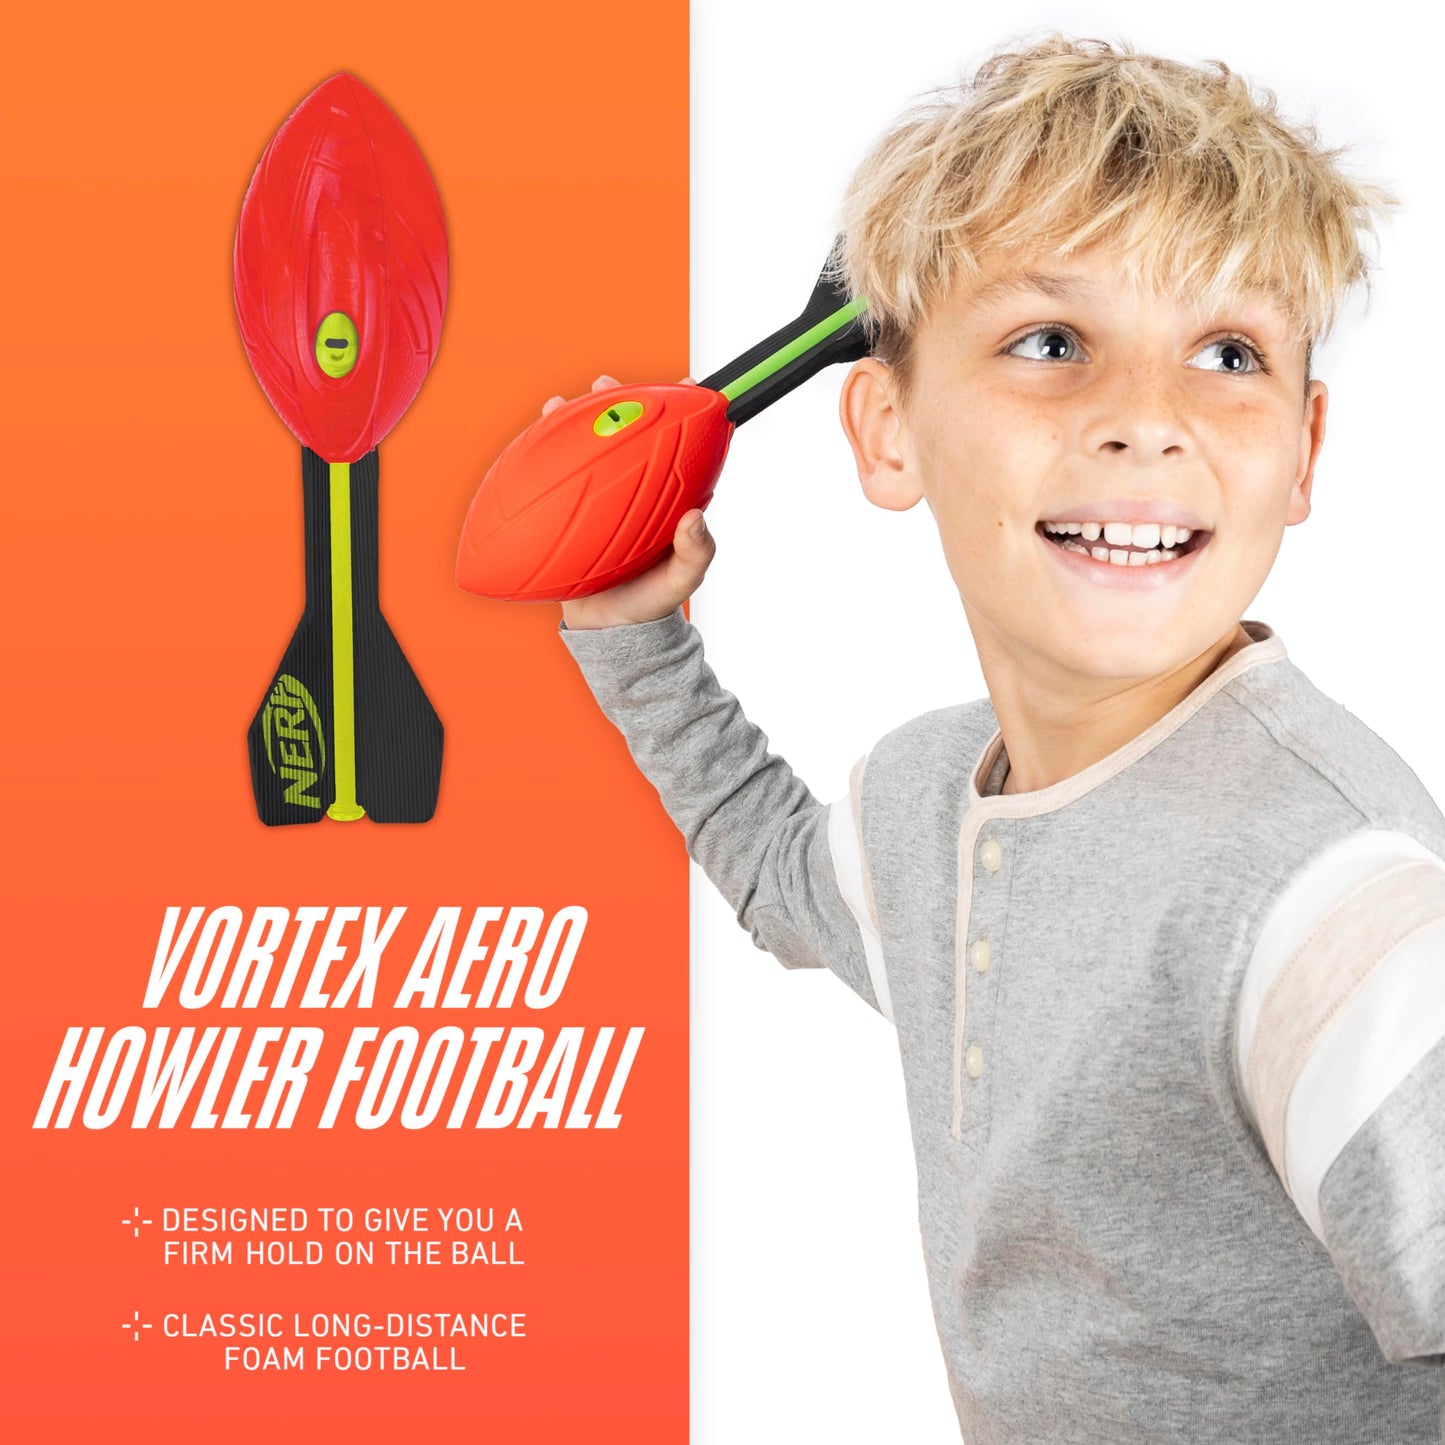 NERF Vortex Aero Howler Foam Football - NERF Soft Vortex Football for Long-Distance Throws - Perfect for Pool + Beach Football - Kids Aero Howler Whistle Vortex Foam Ball - Red